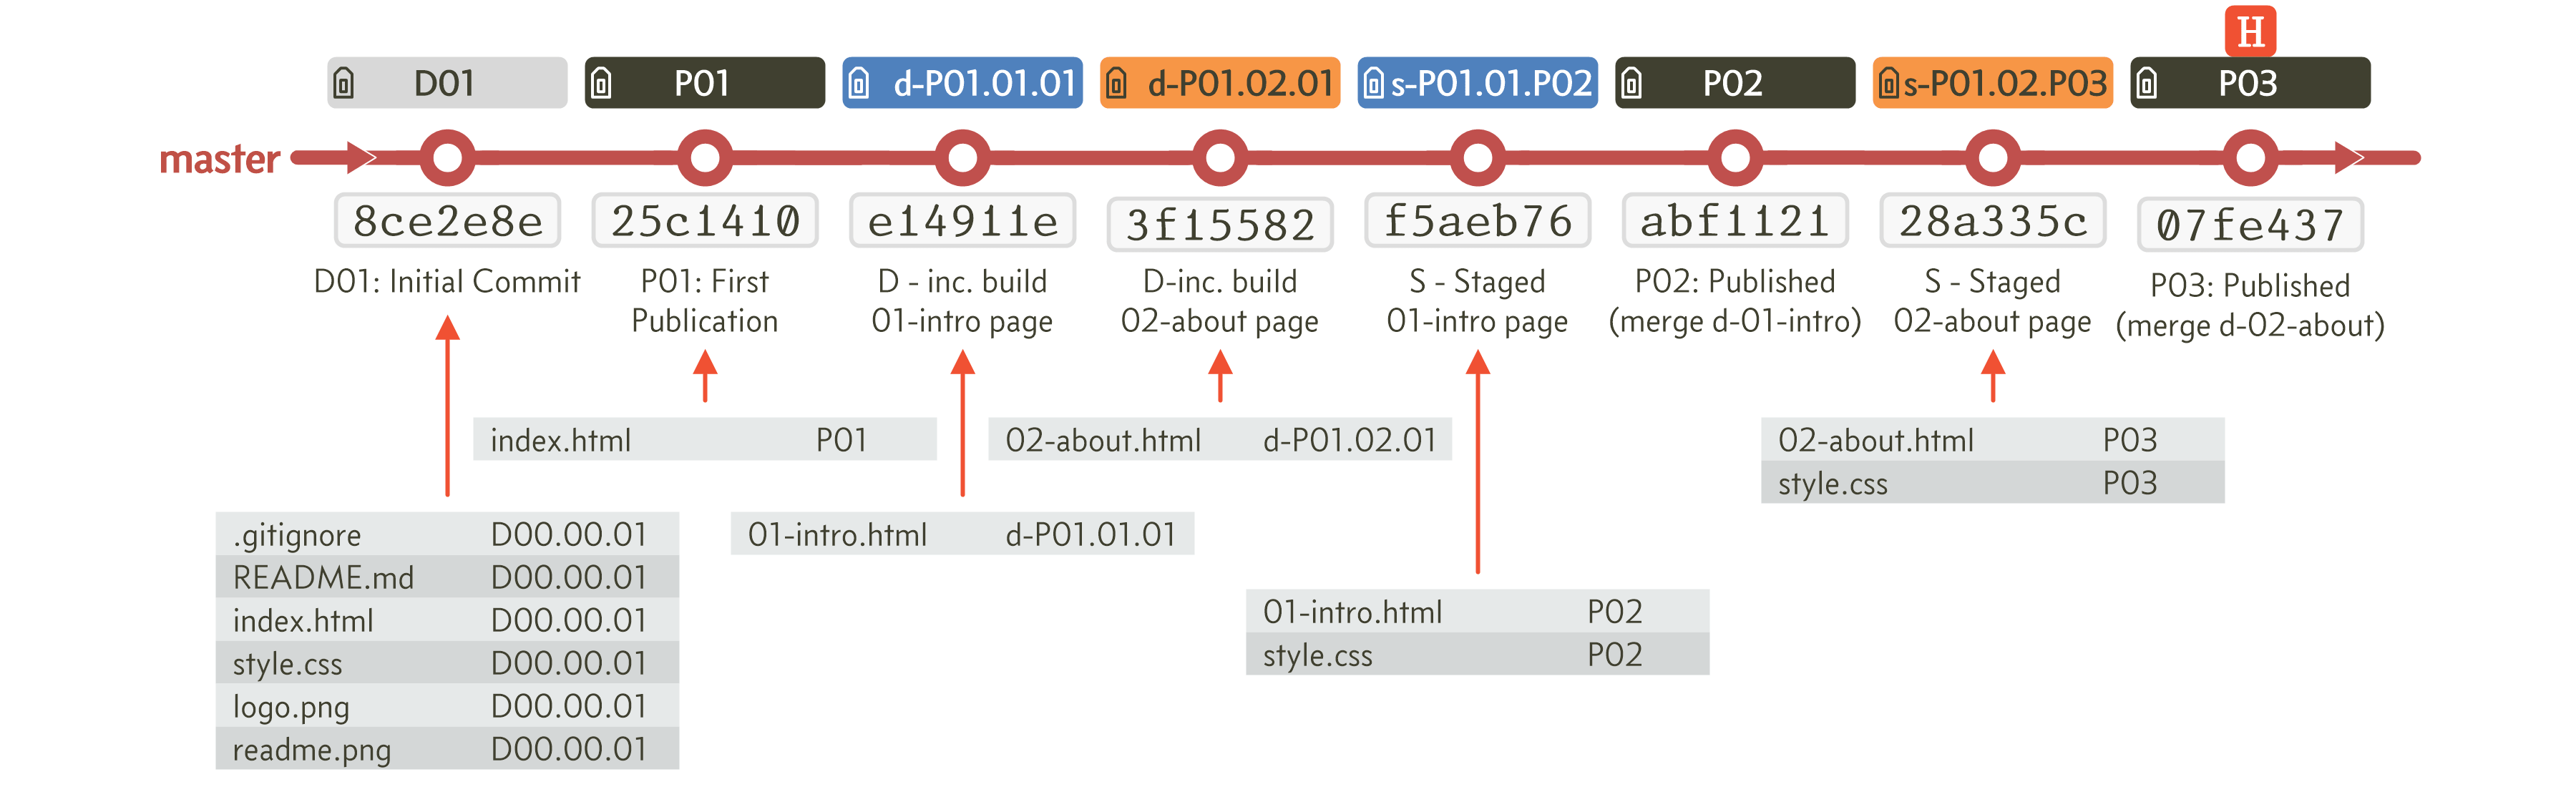 Figure 6.82 - Final arrangement, all merged back to master branch